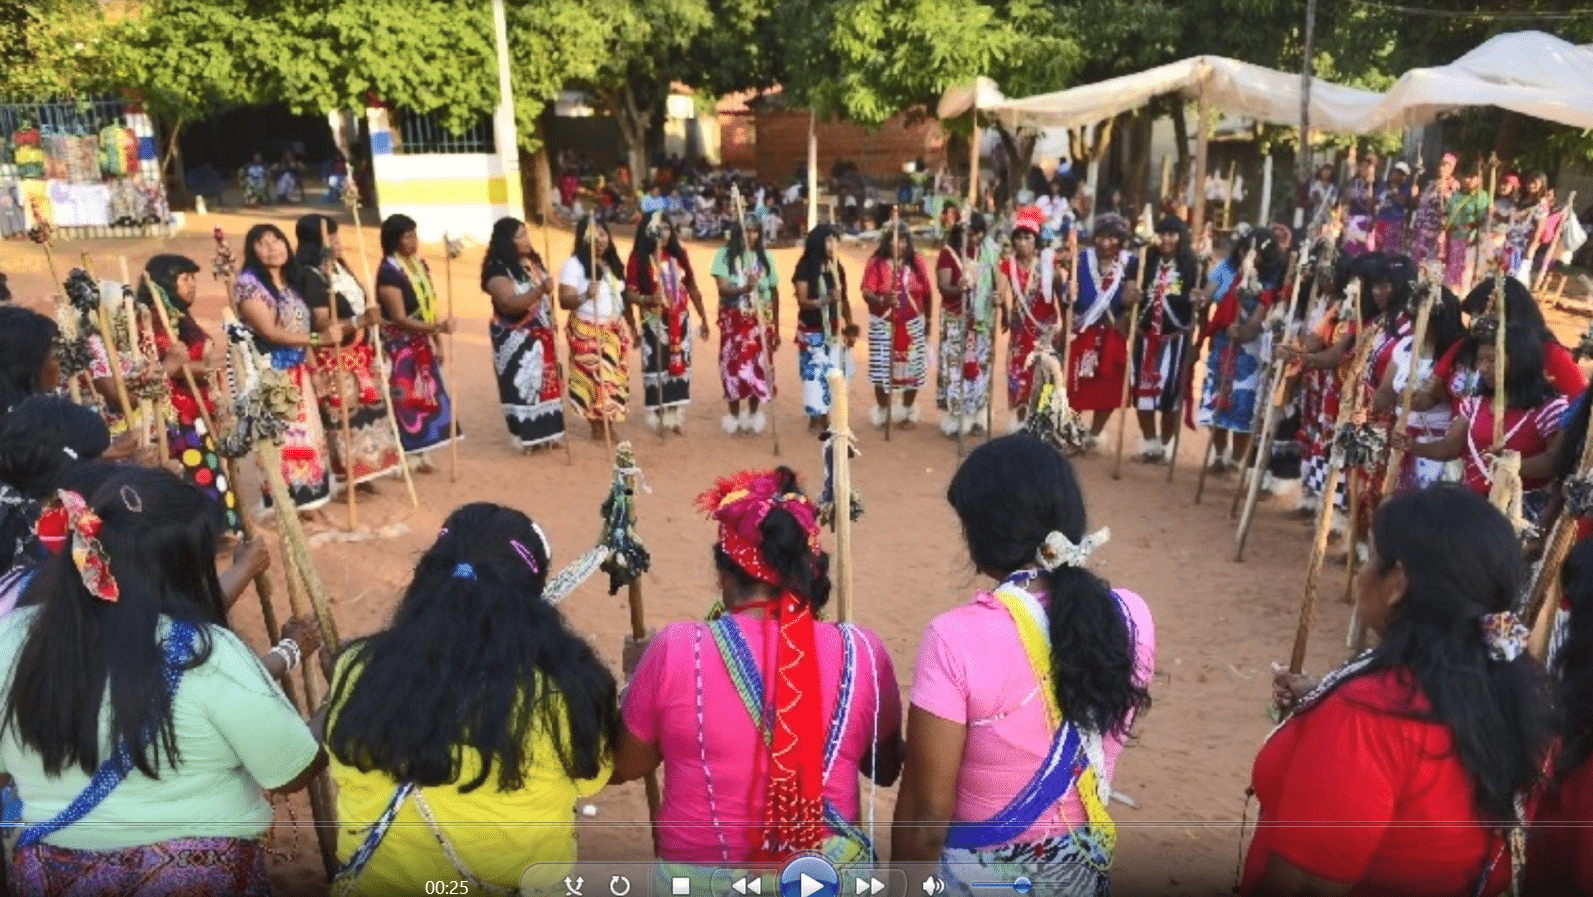 Lorraine - Extrait vidéo Tierraviva - peuple autochtone